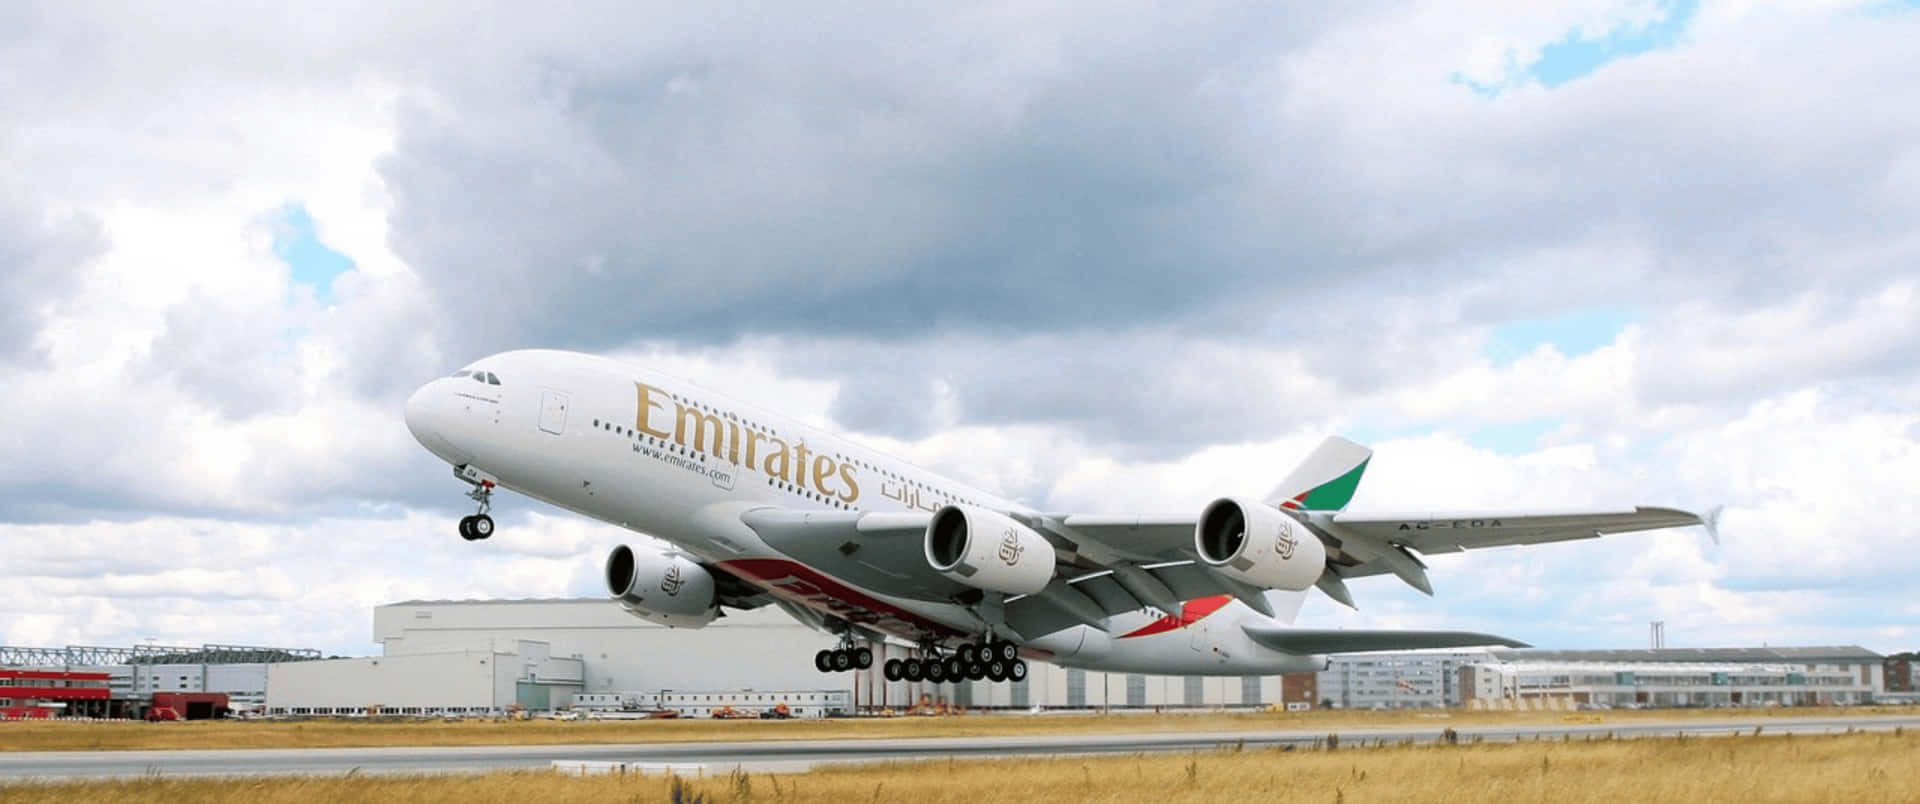 Big Emirates 3440x1440p Plane Background